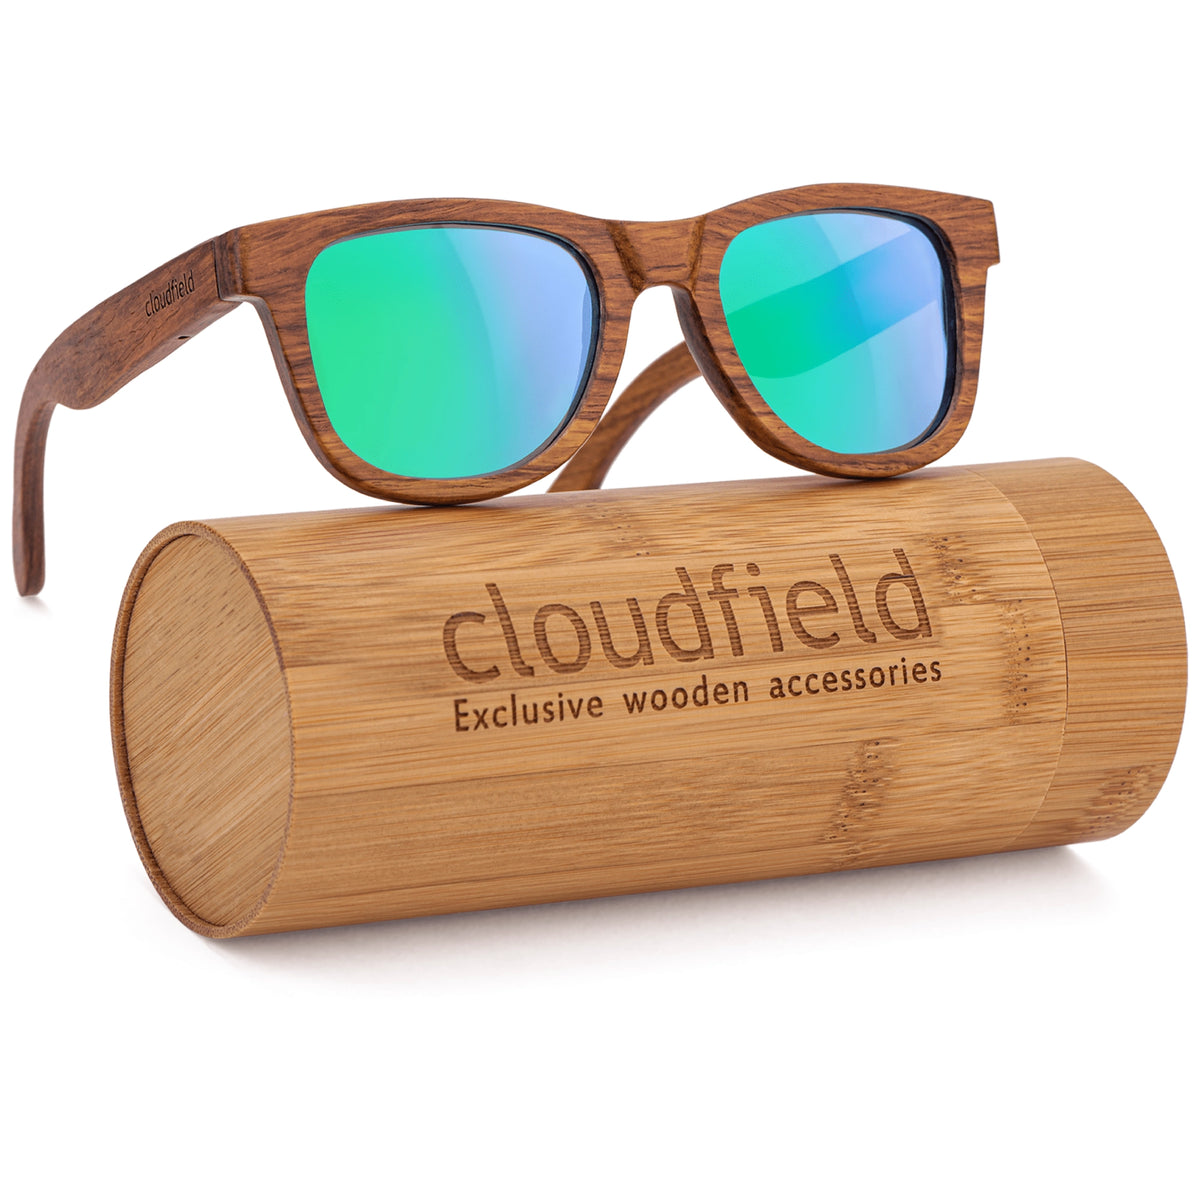 Cloudfield Unisex Polarized Wood Sunglasses - Kosso Green